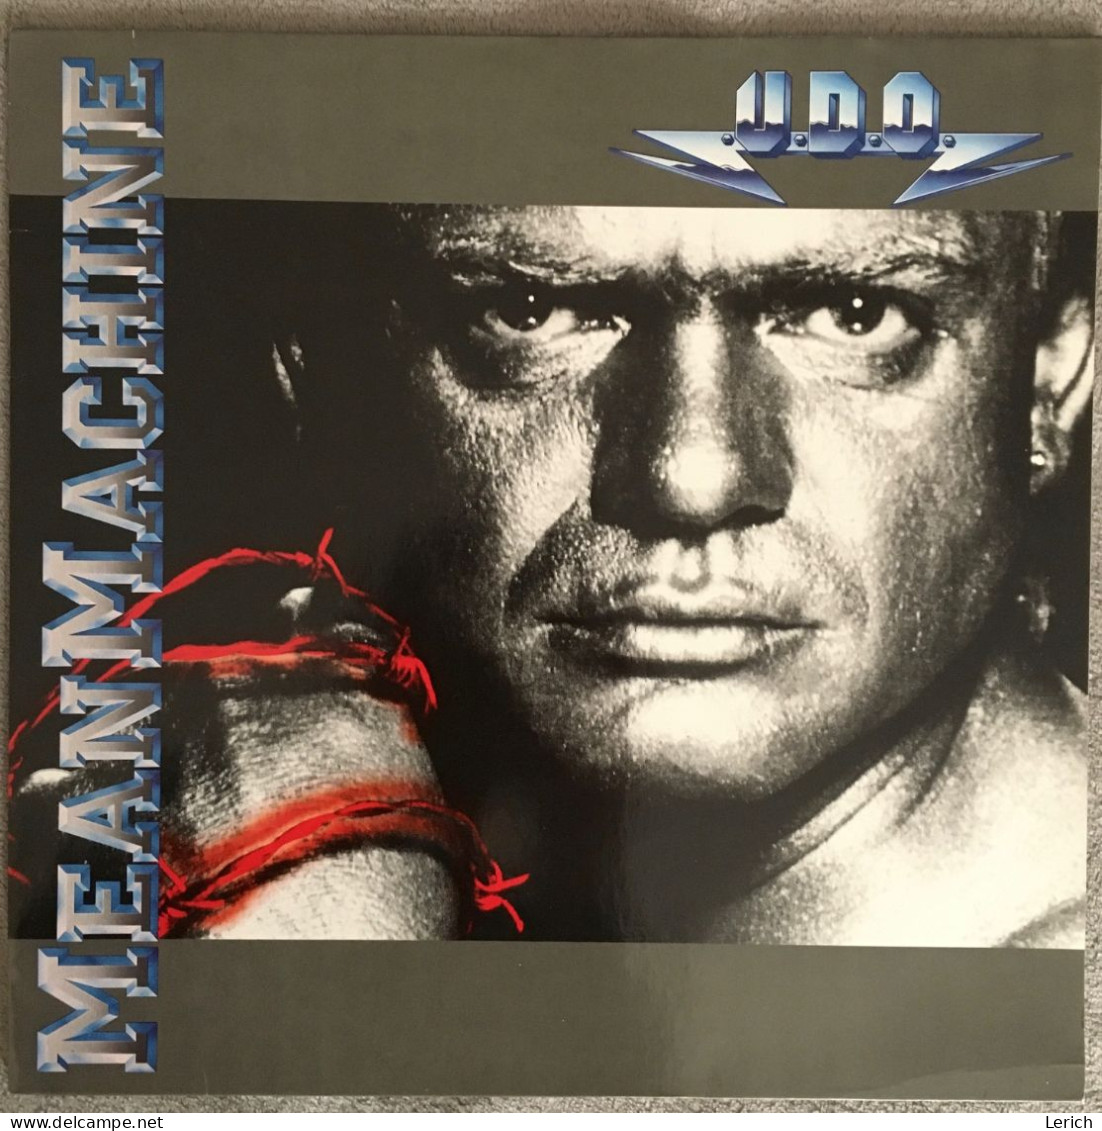 UDO – Mean Machine - Hard Rock & Metal